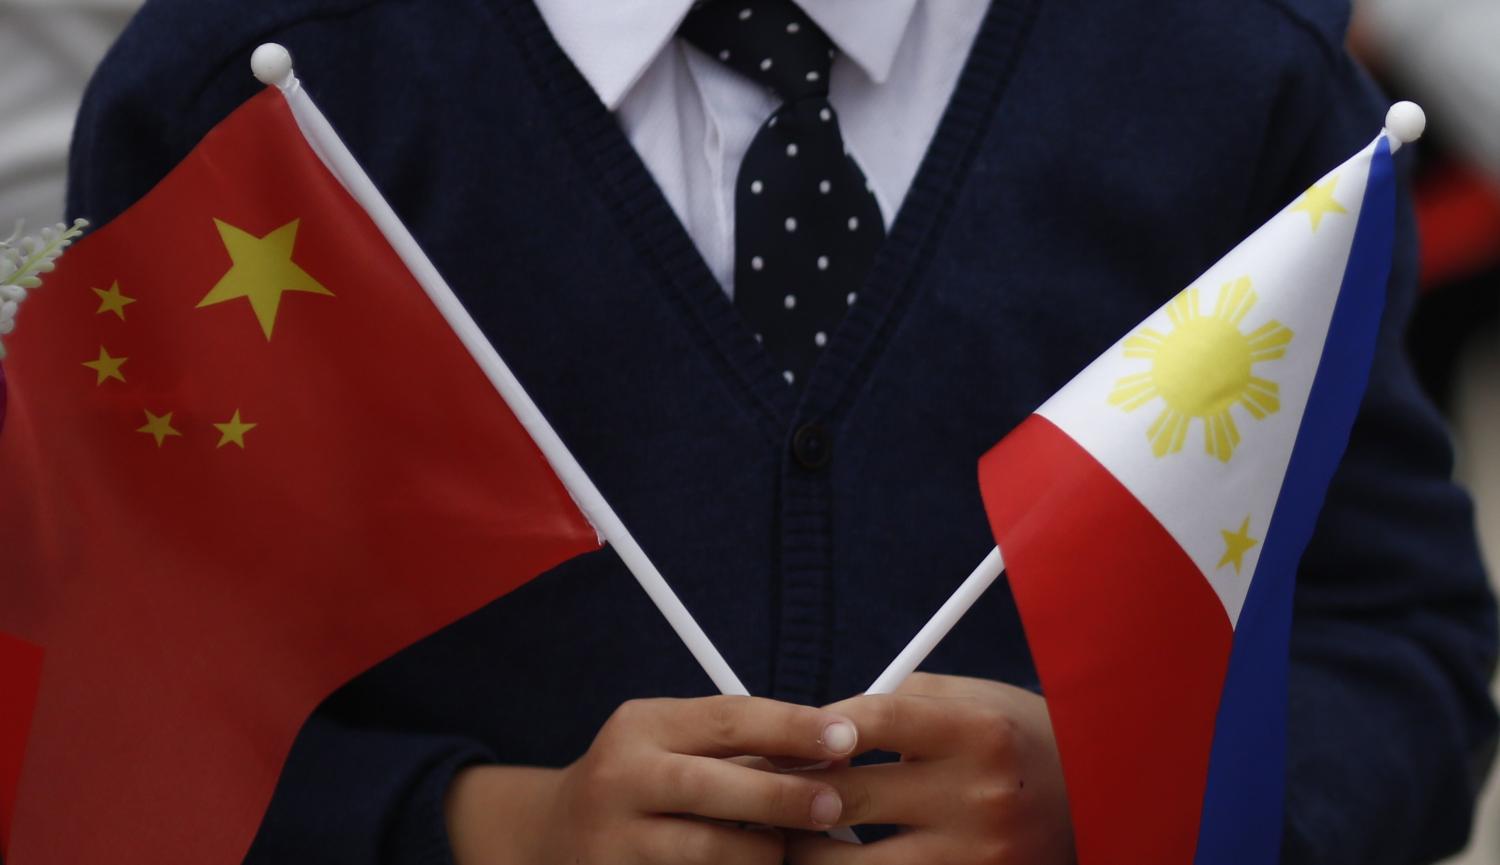 Children hold national flags during Philippine President Rodrigo Duterte’s visit to Beijing in 2016 (Photo: Thomas Peter-Pool/Getty)